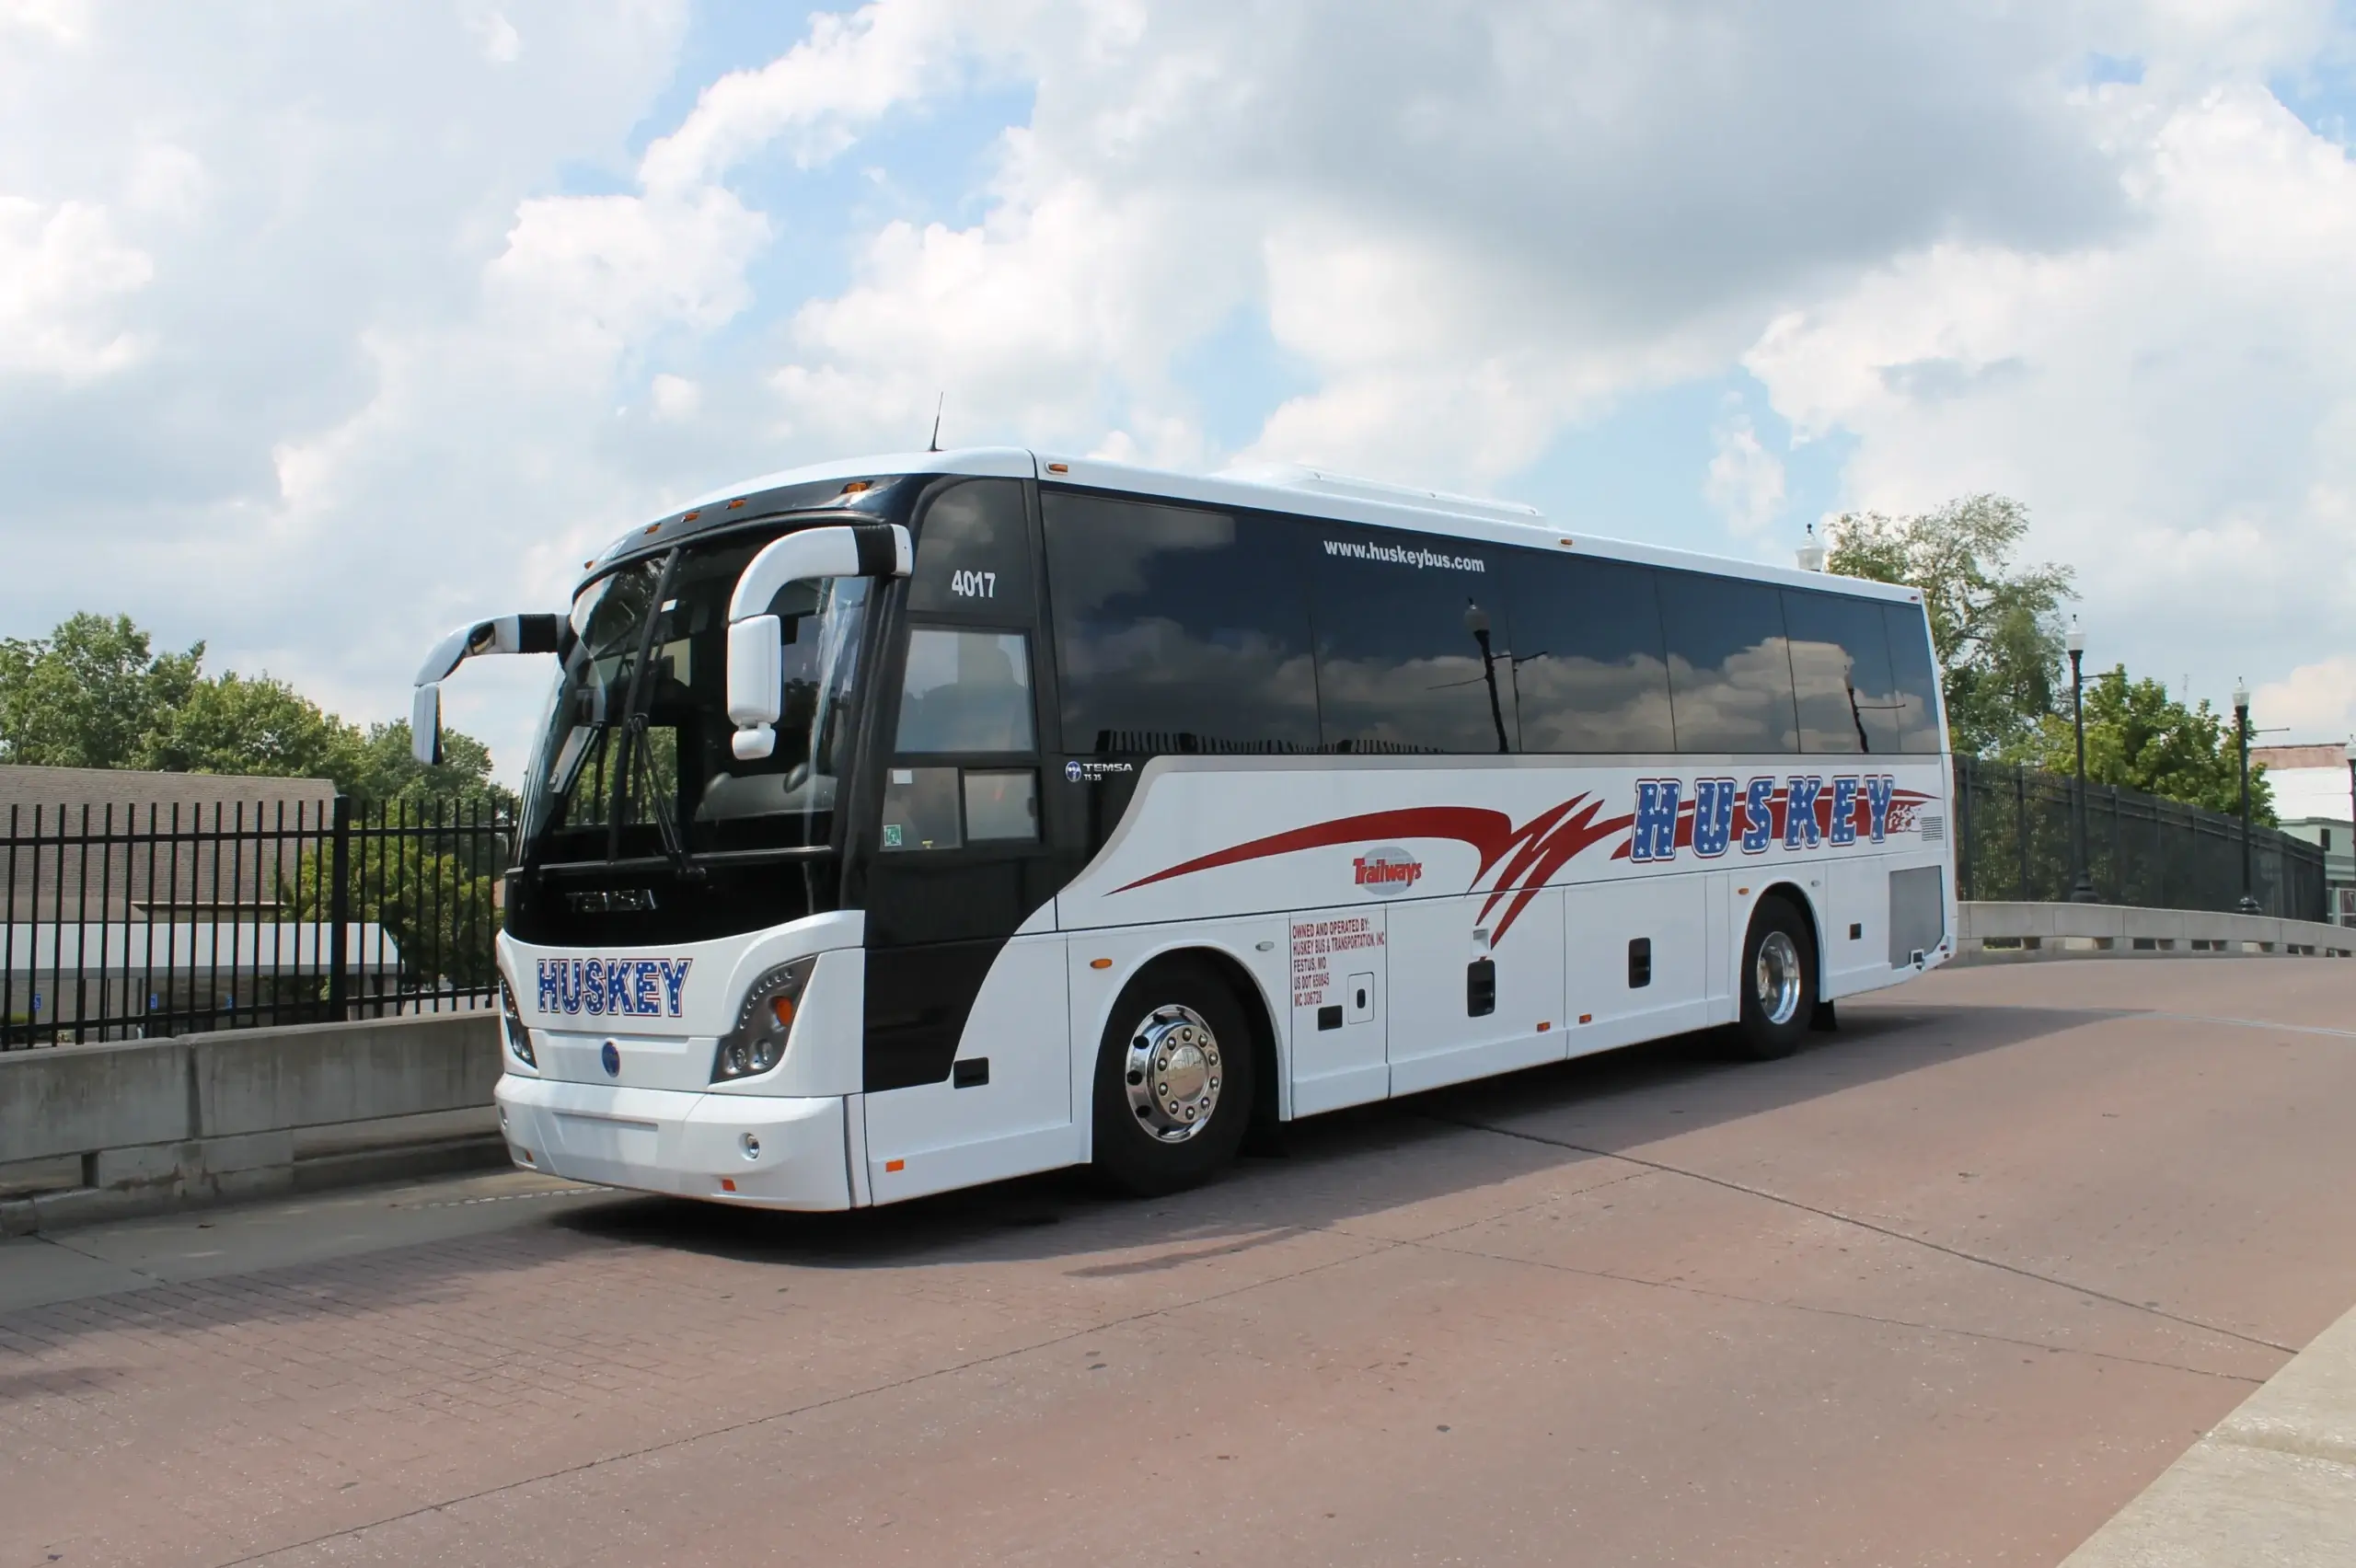 40 Passenger Charter Bus